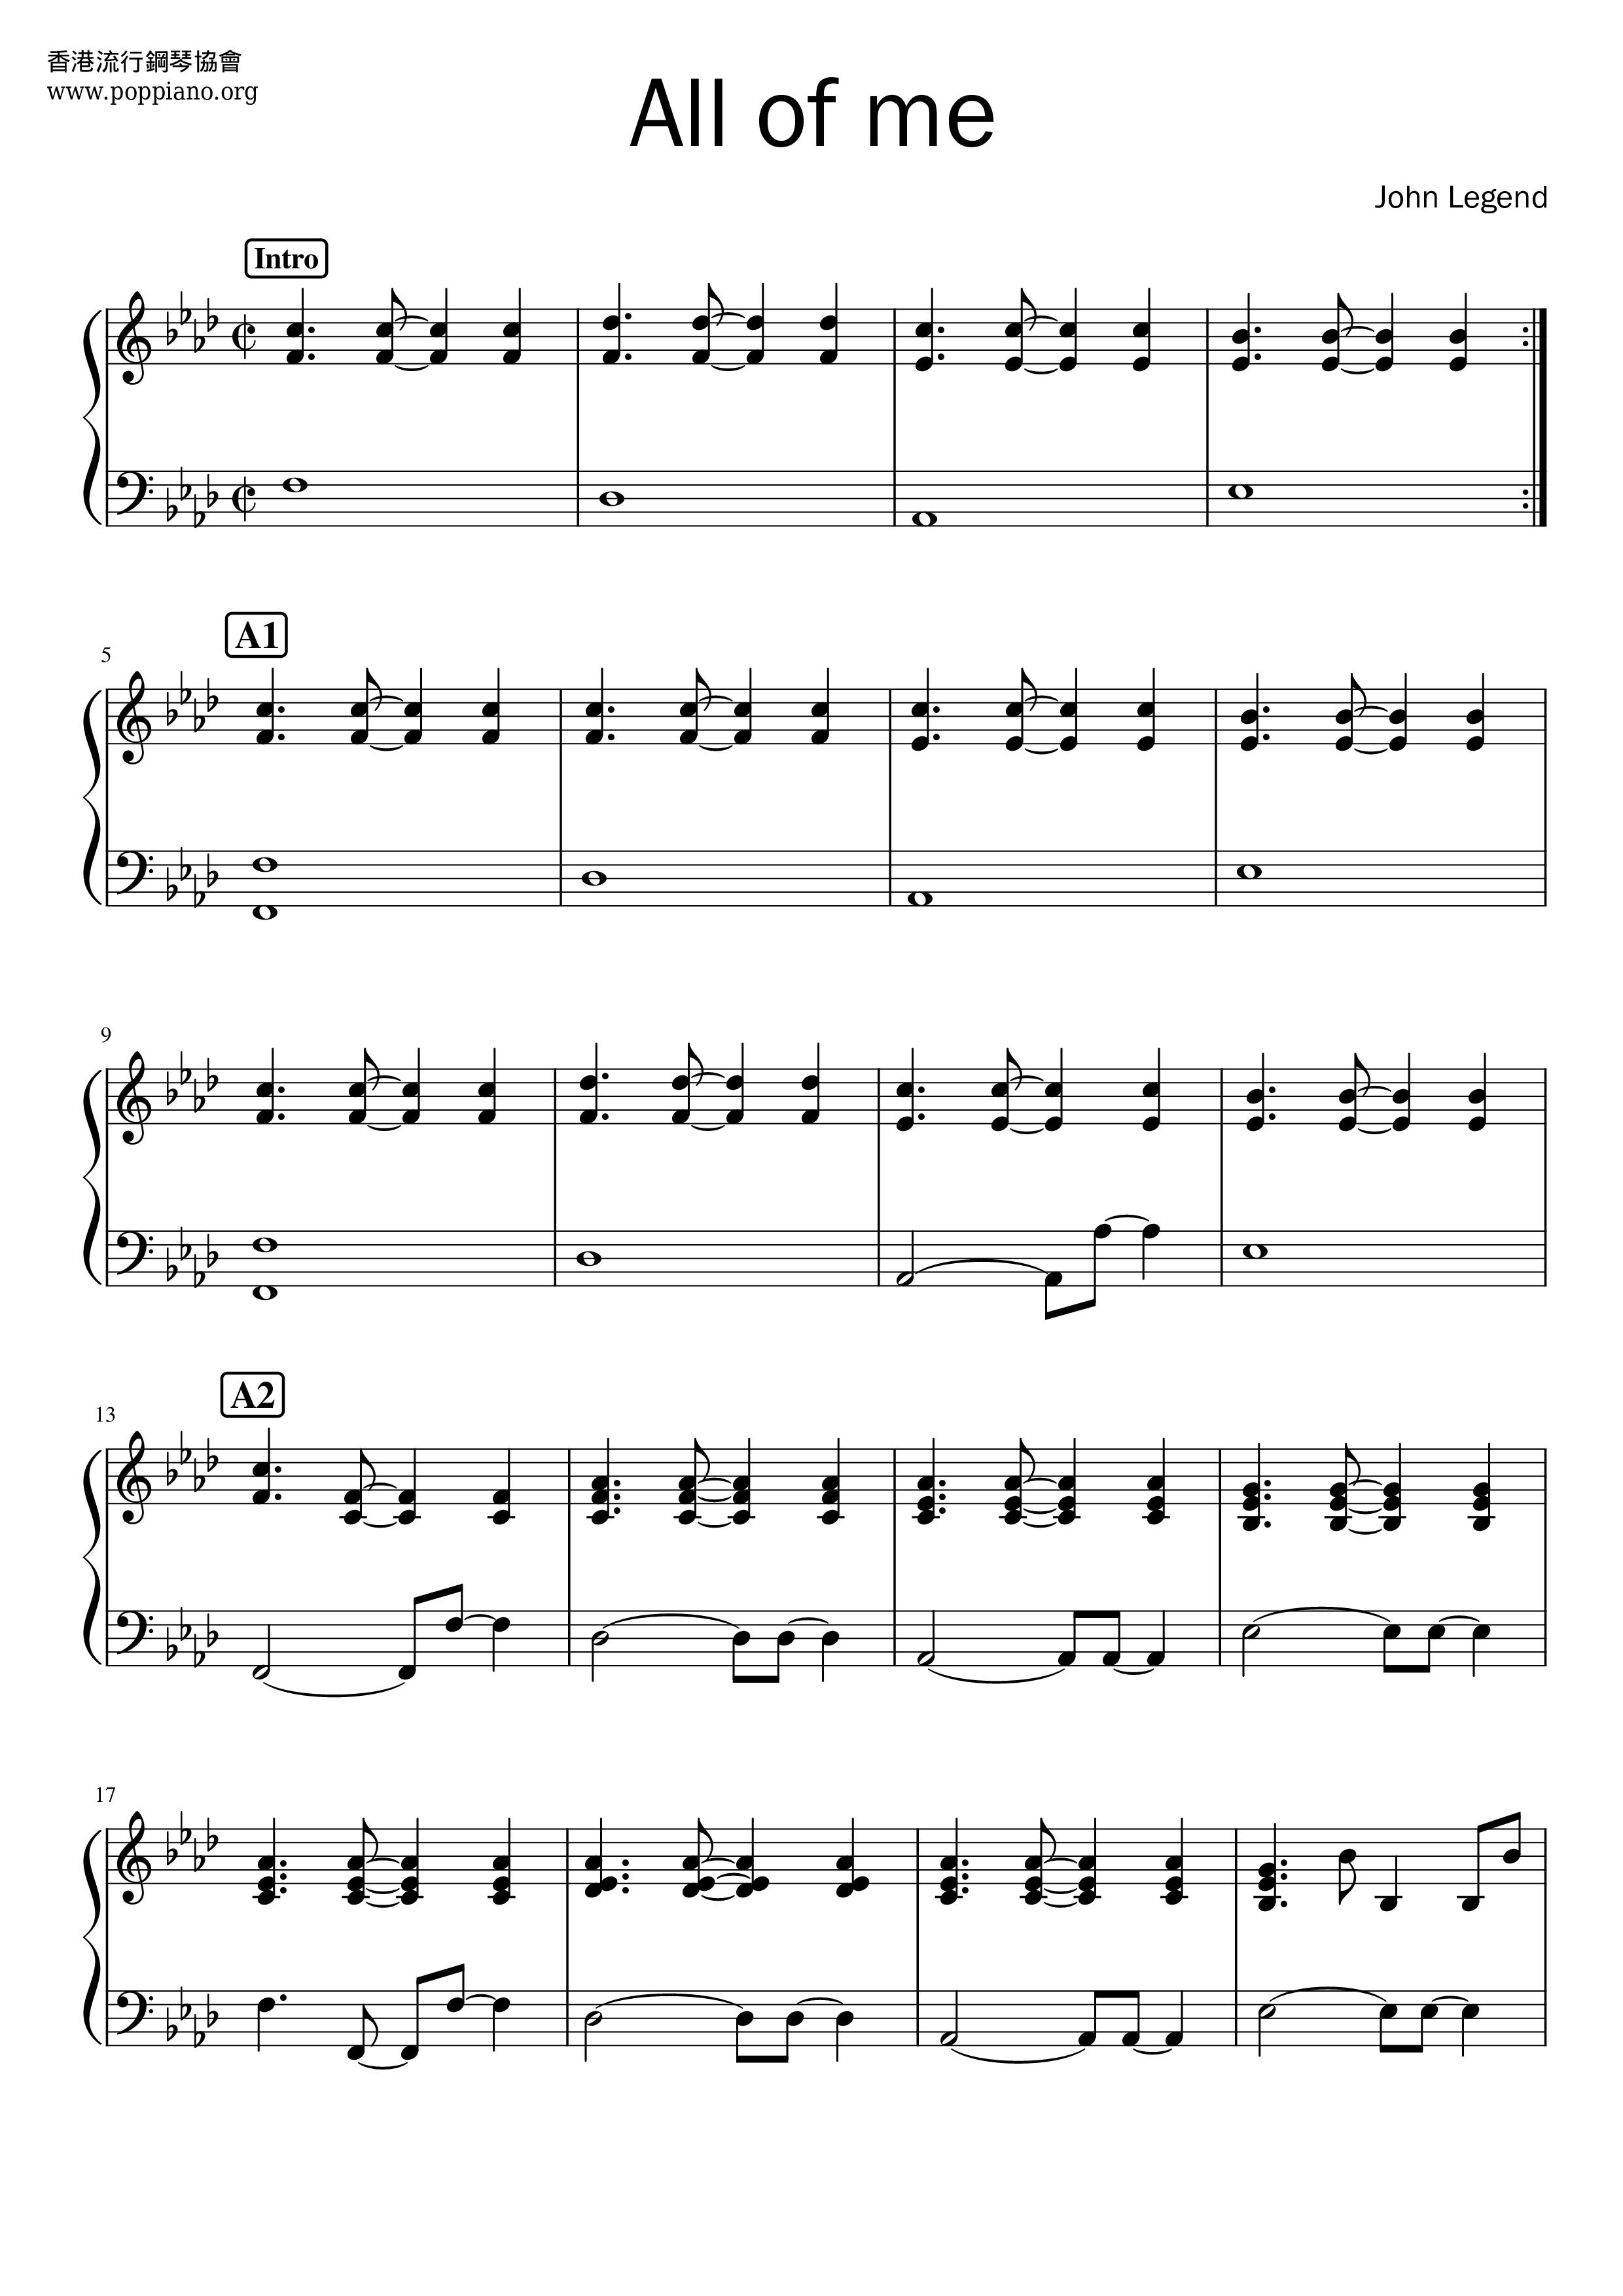 All Of Me Sheet Music | John Legend | Piano, Vocal & Guitar Chords ...